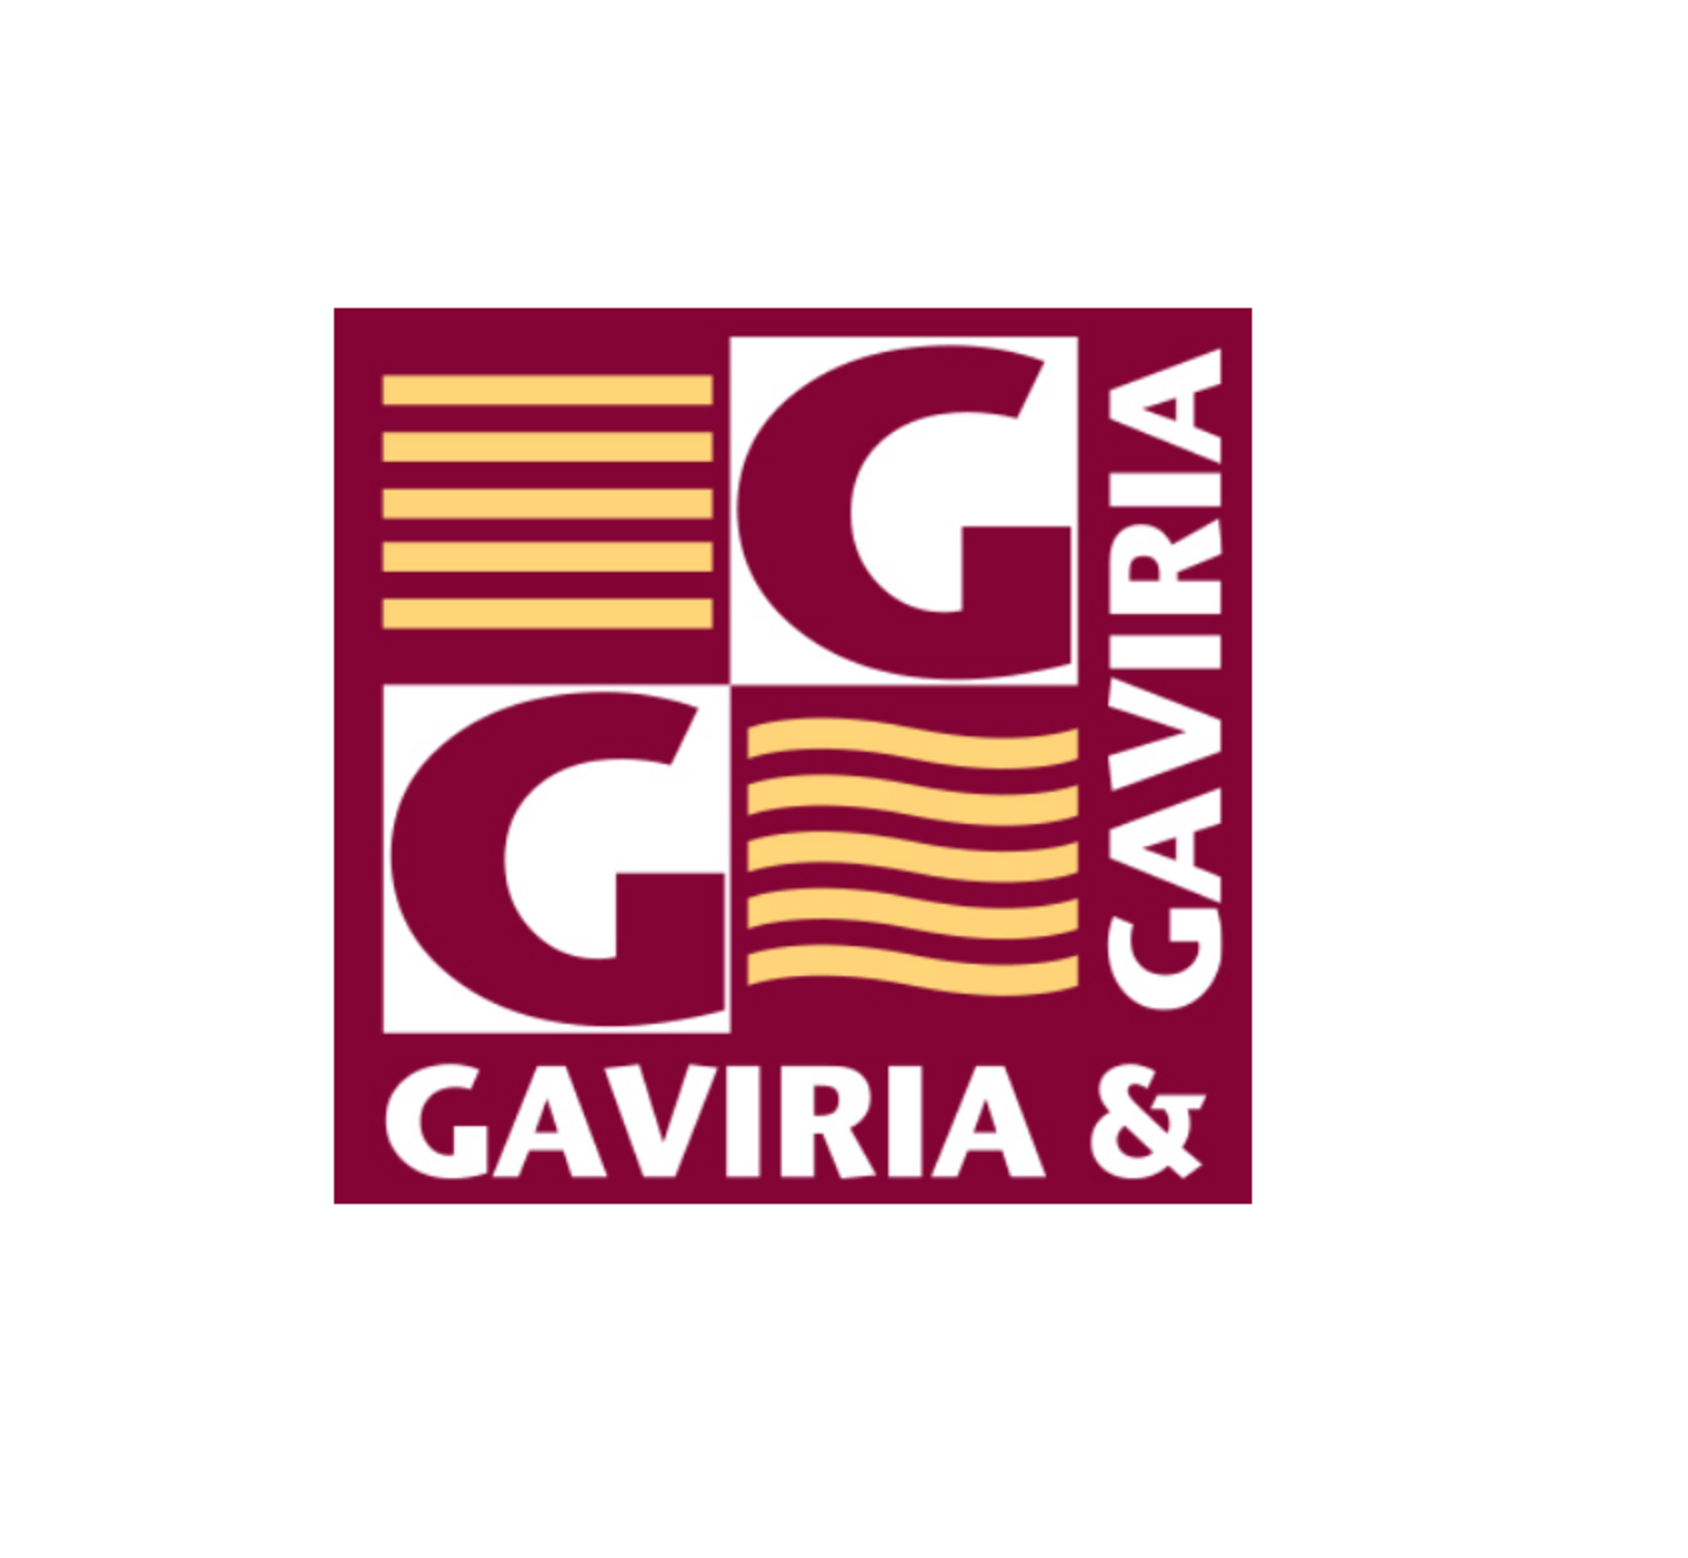 Gaviria & Gaviria Agentes Nacionales de Aduana S.A.